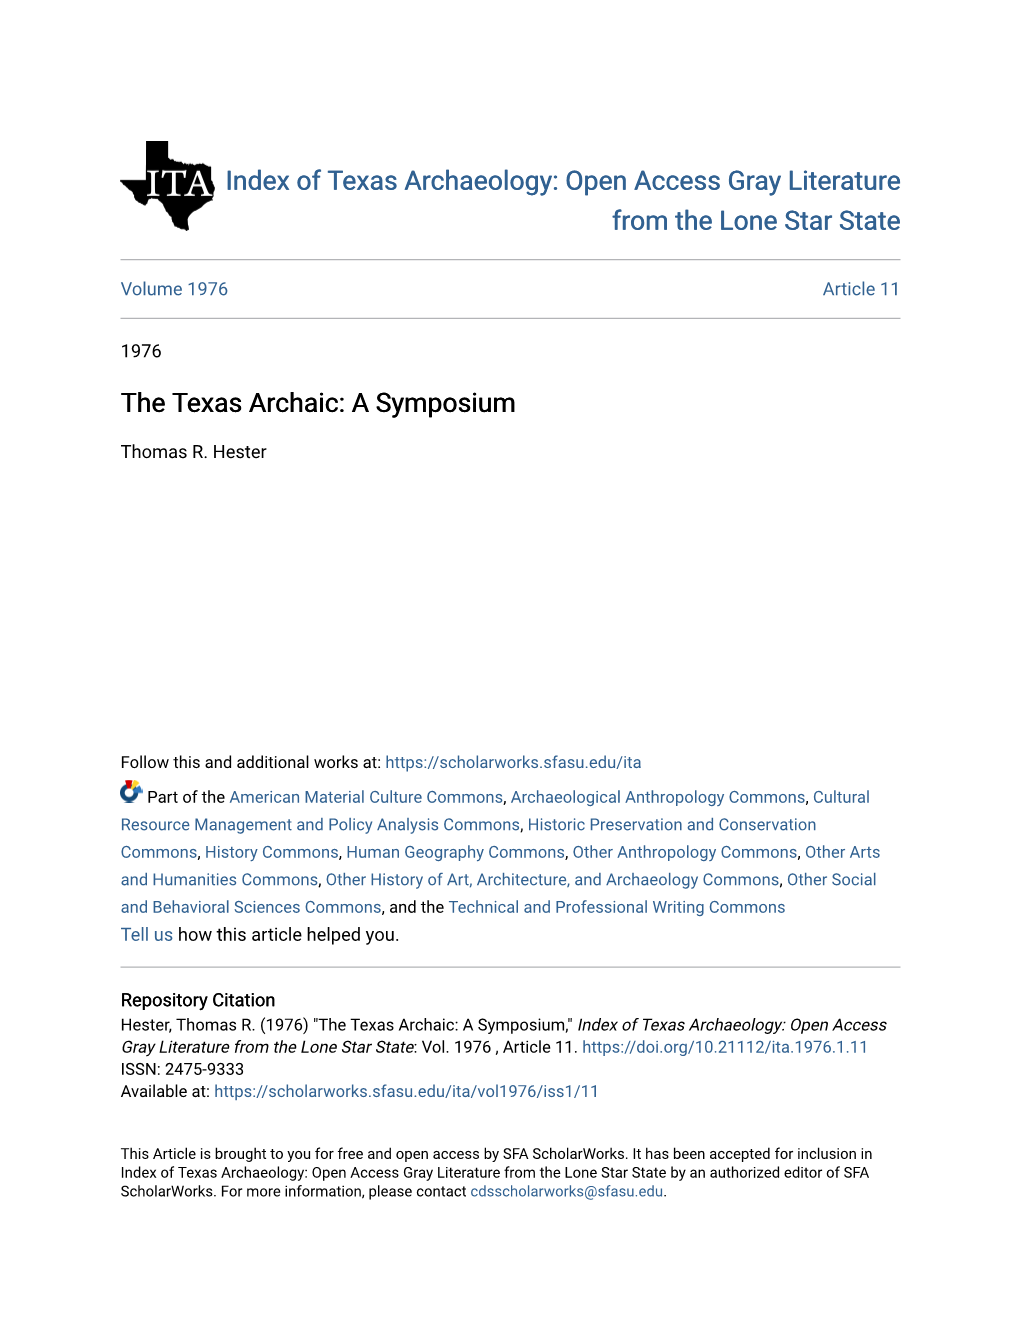 The Texas Archaic: a Symposium